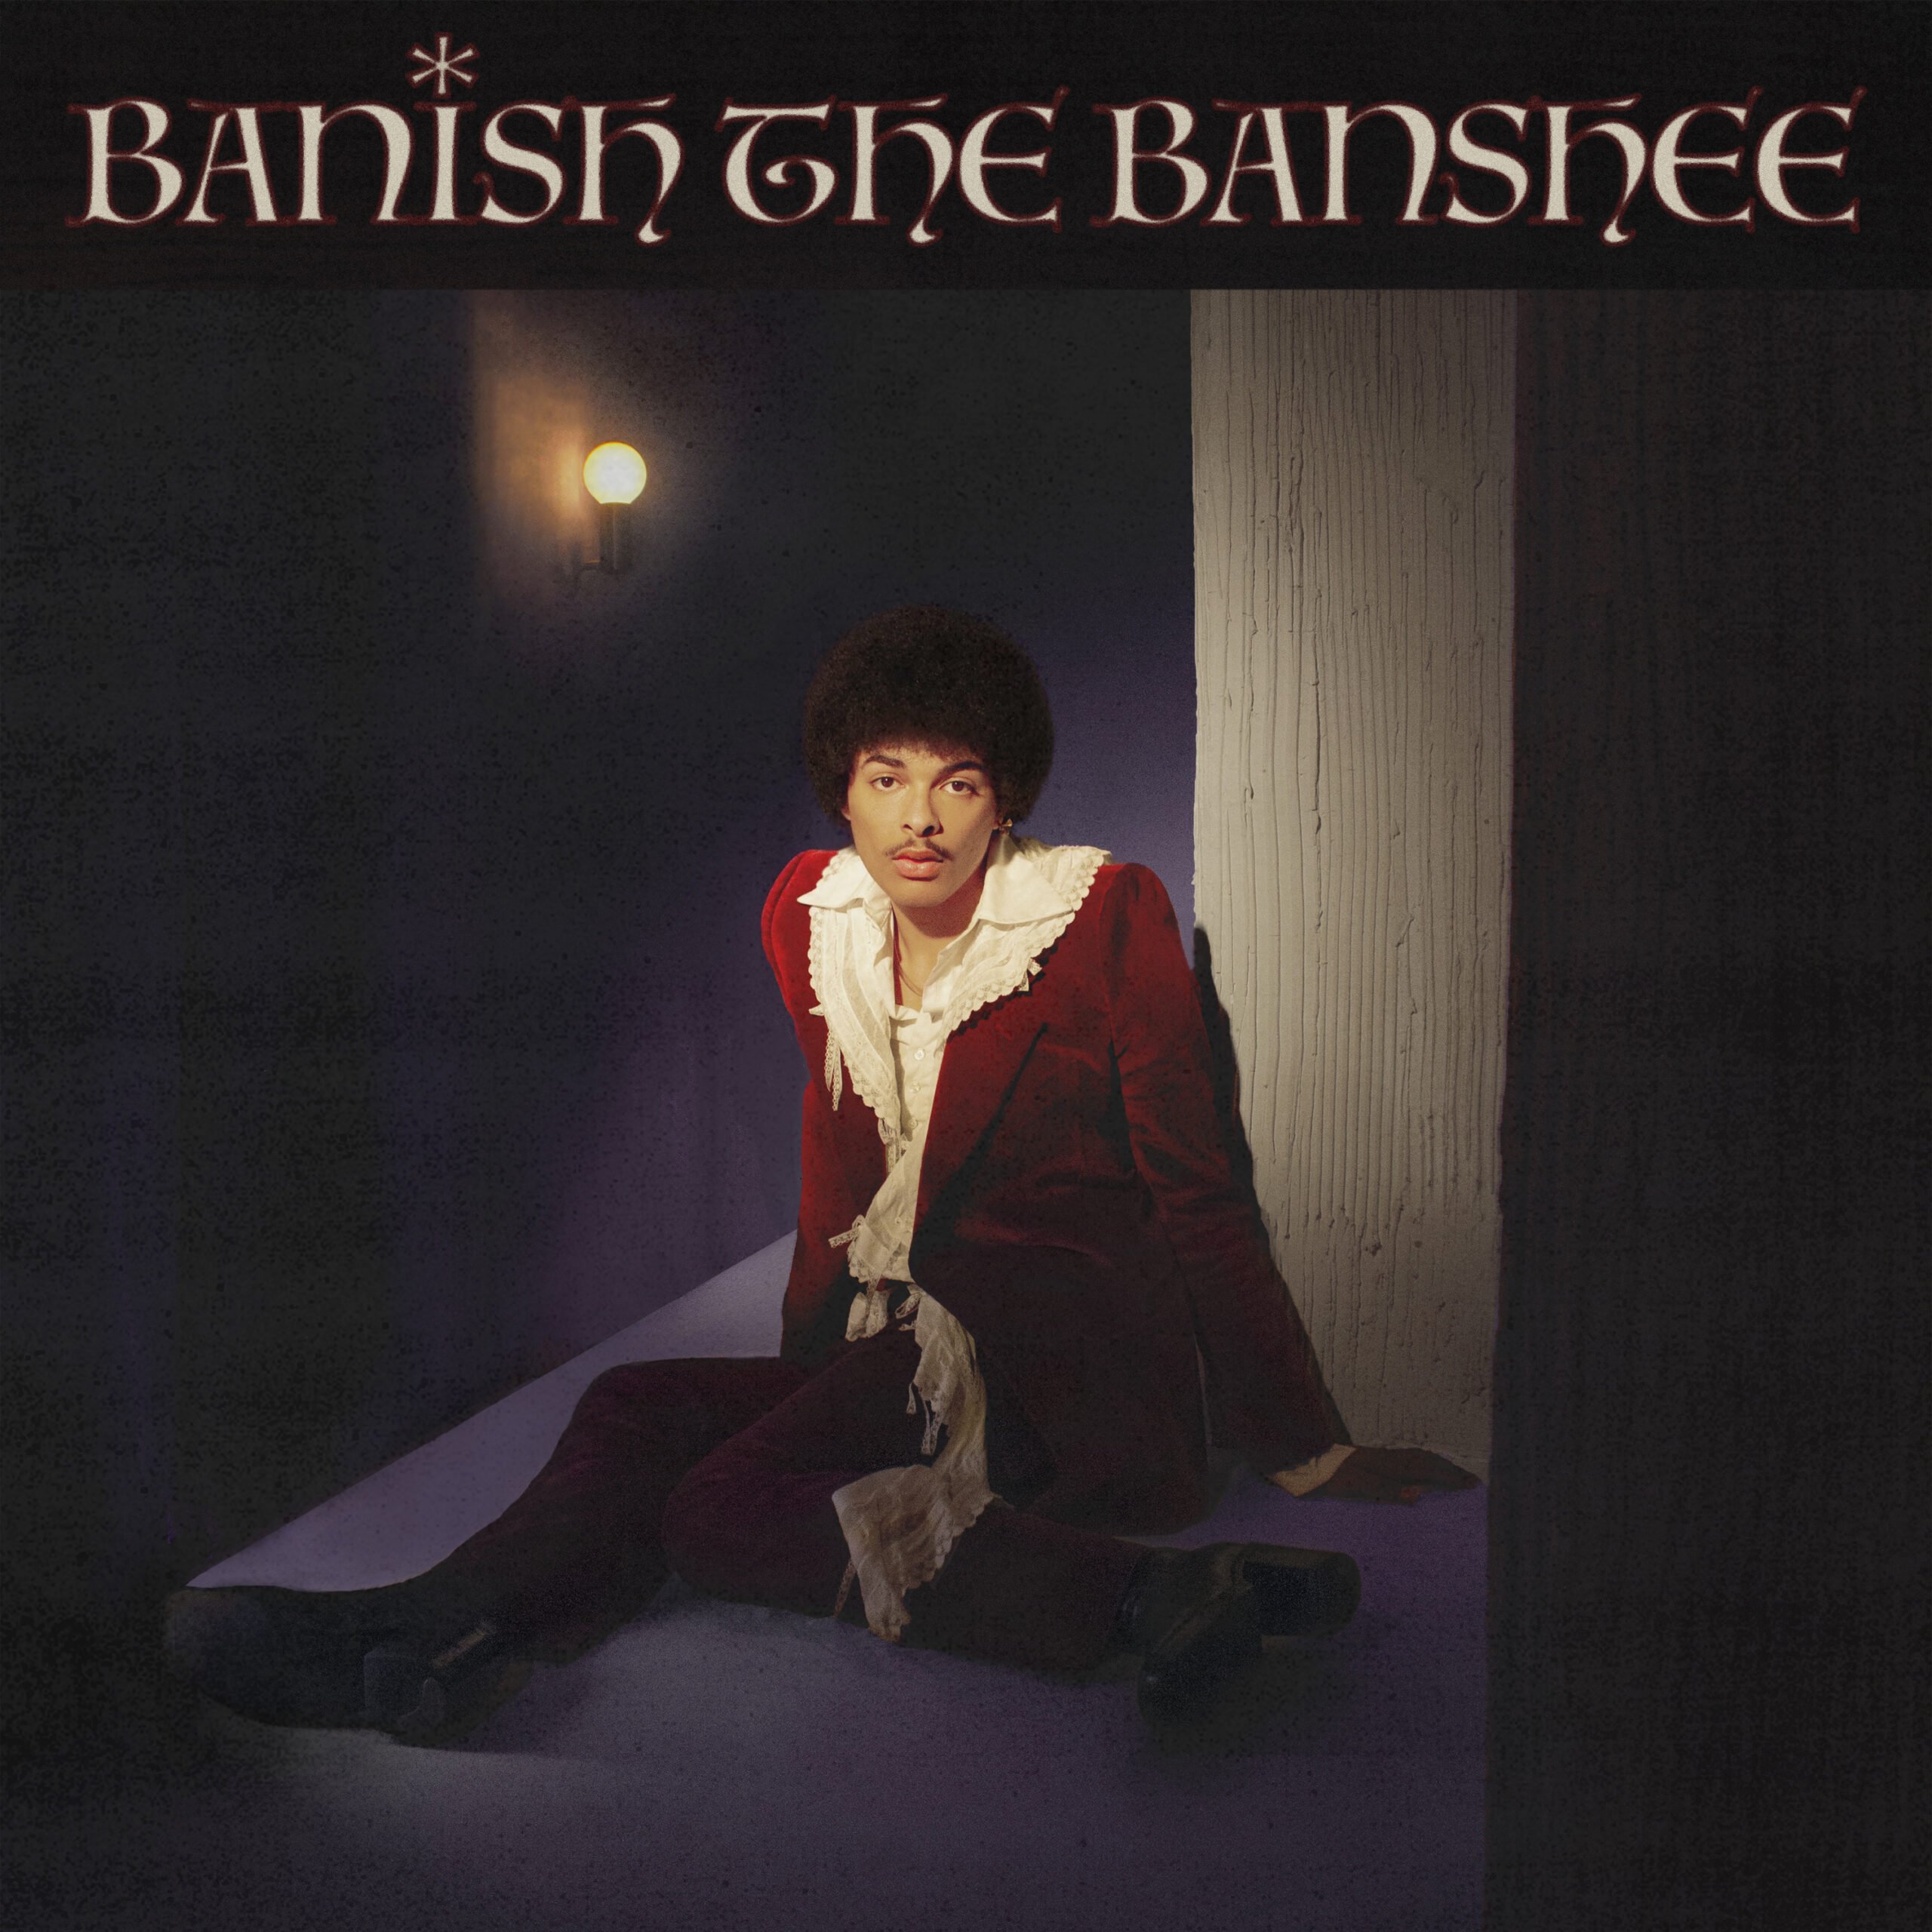 Banish the Banshee Artwork via Alex John at RCA Records for use by 360 Magazine